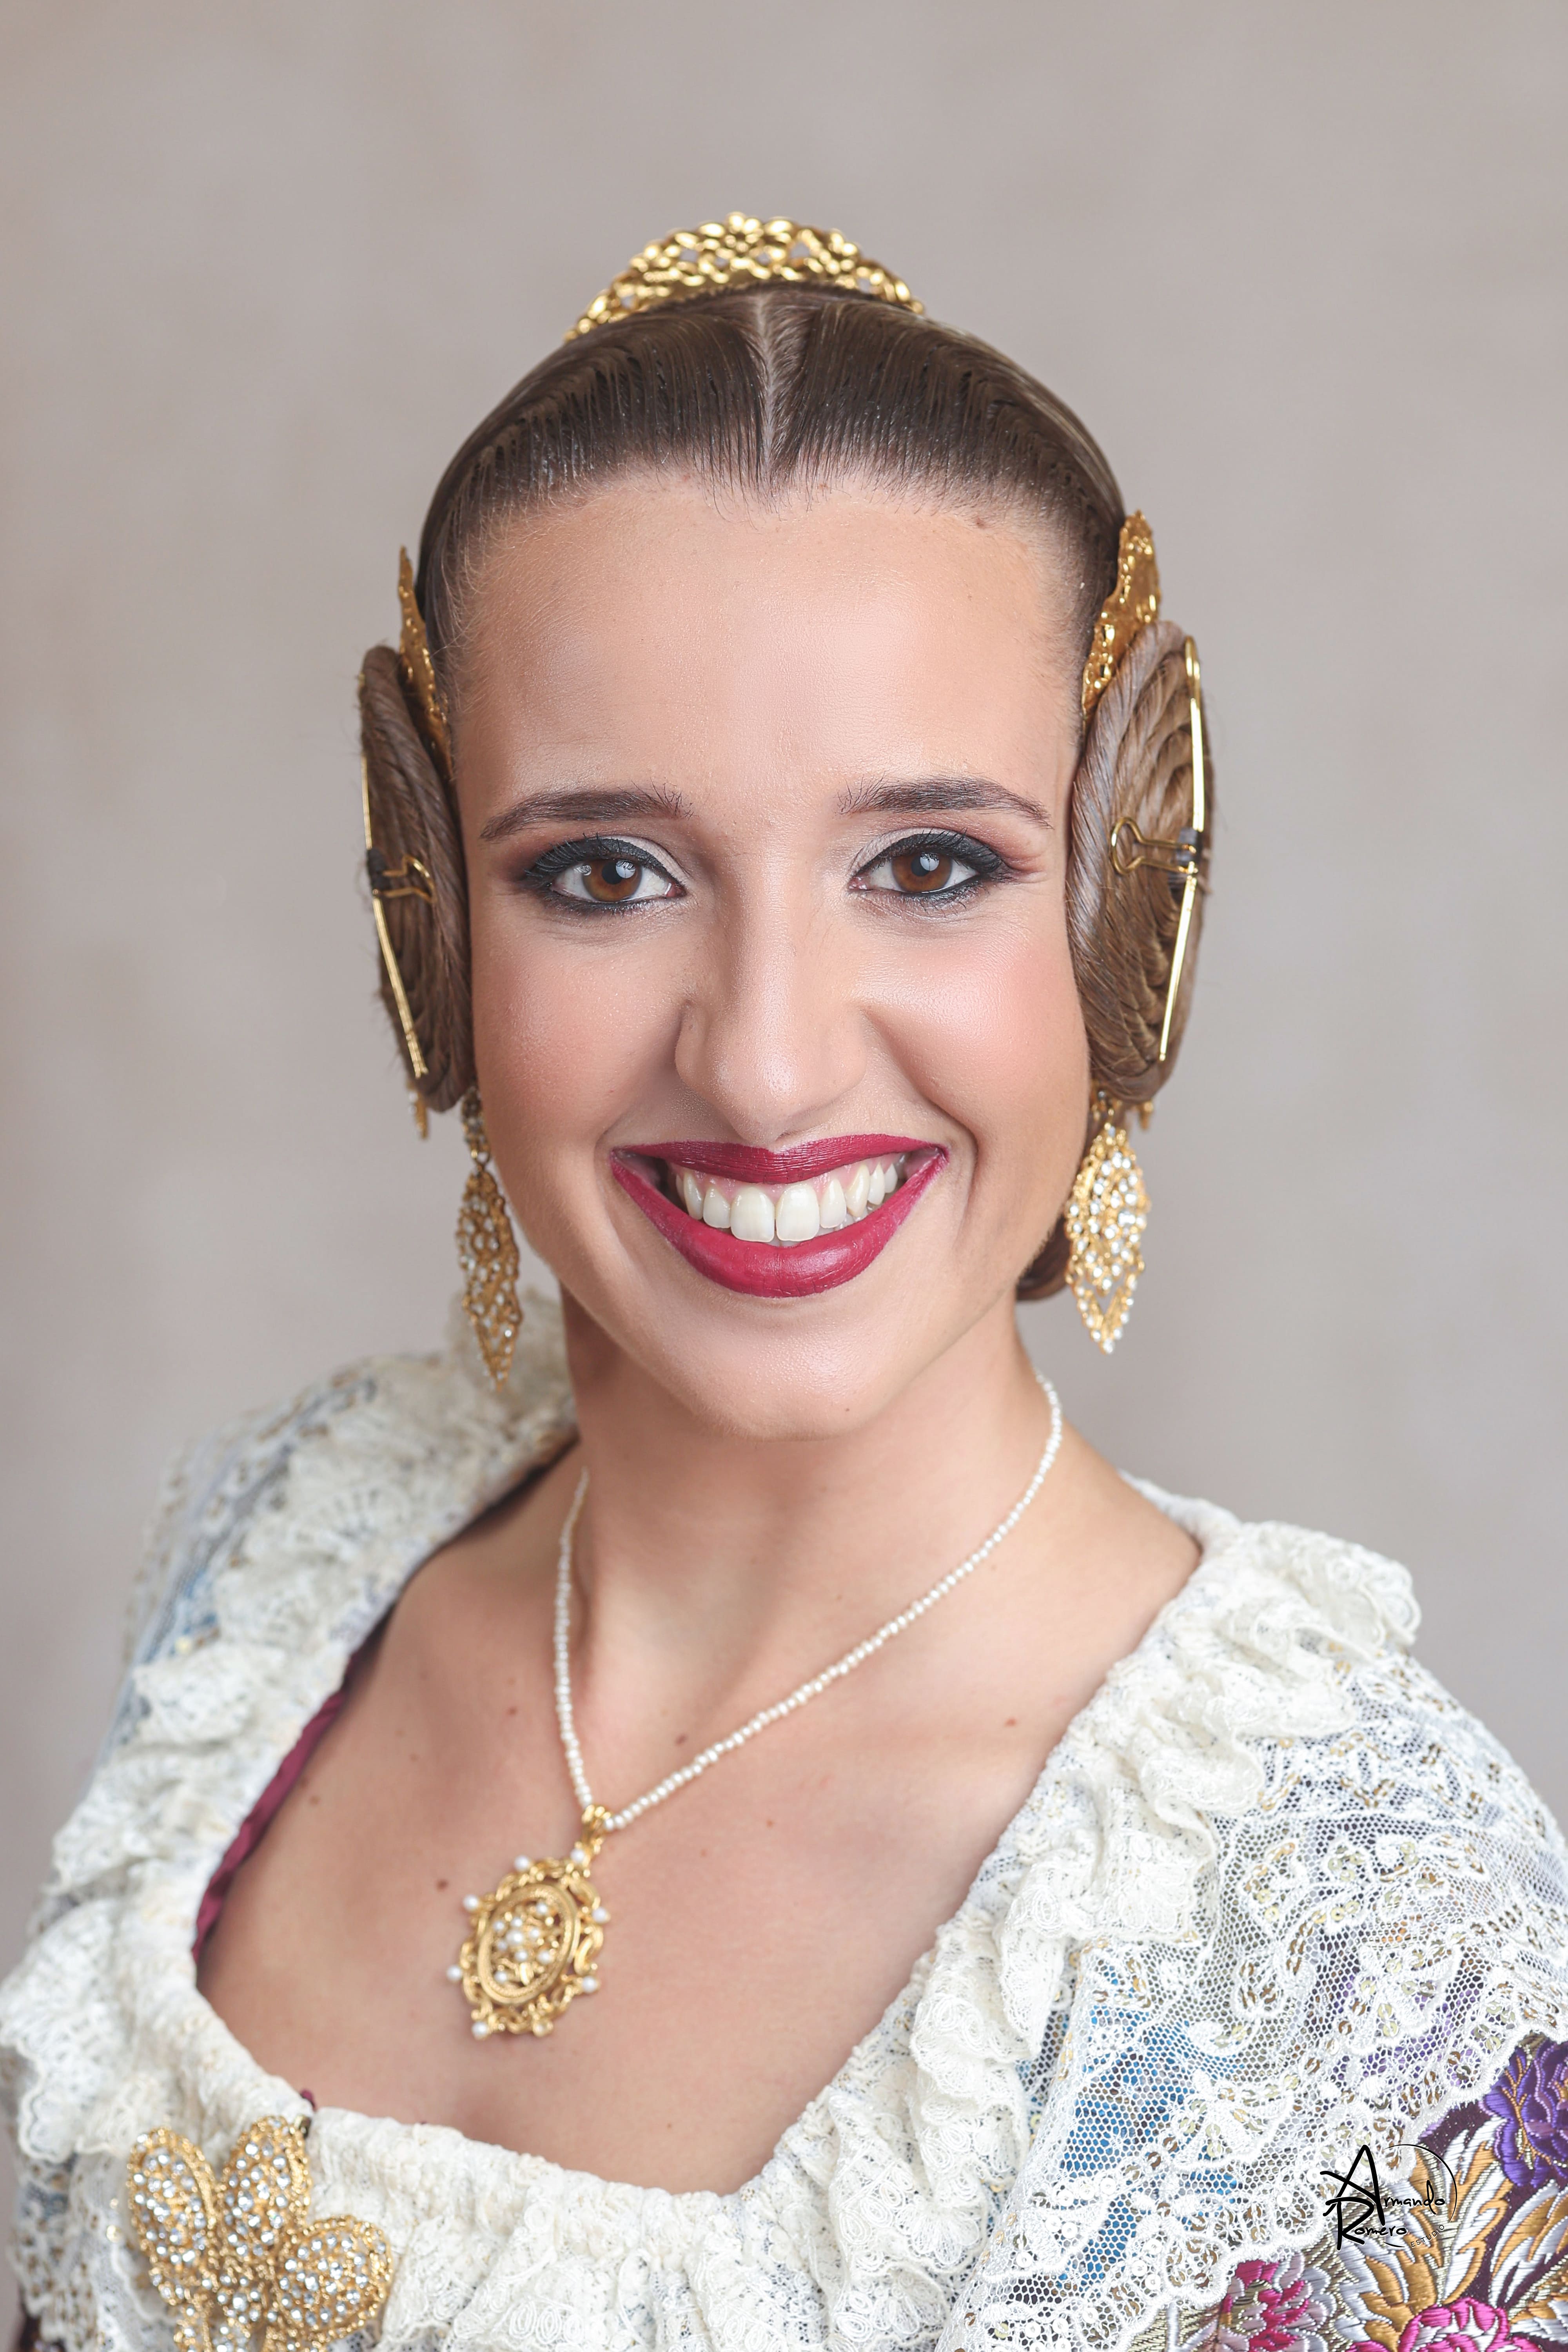 Carolina Urgel Martínez